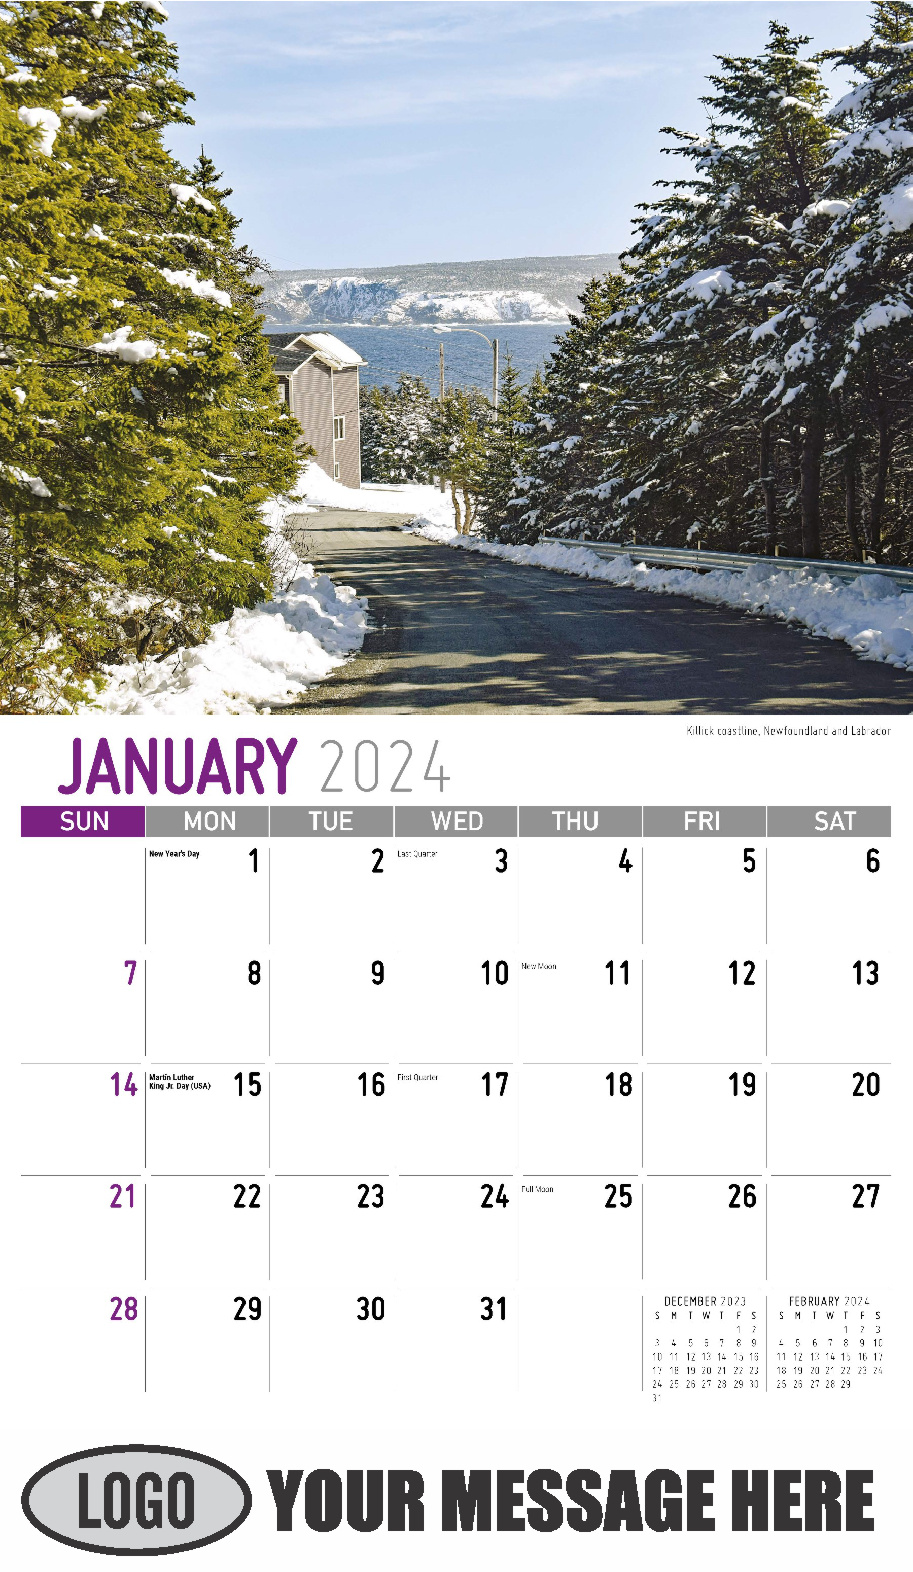 Atlantic Canada Scenic 2024 Business Promotion Calendar - January